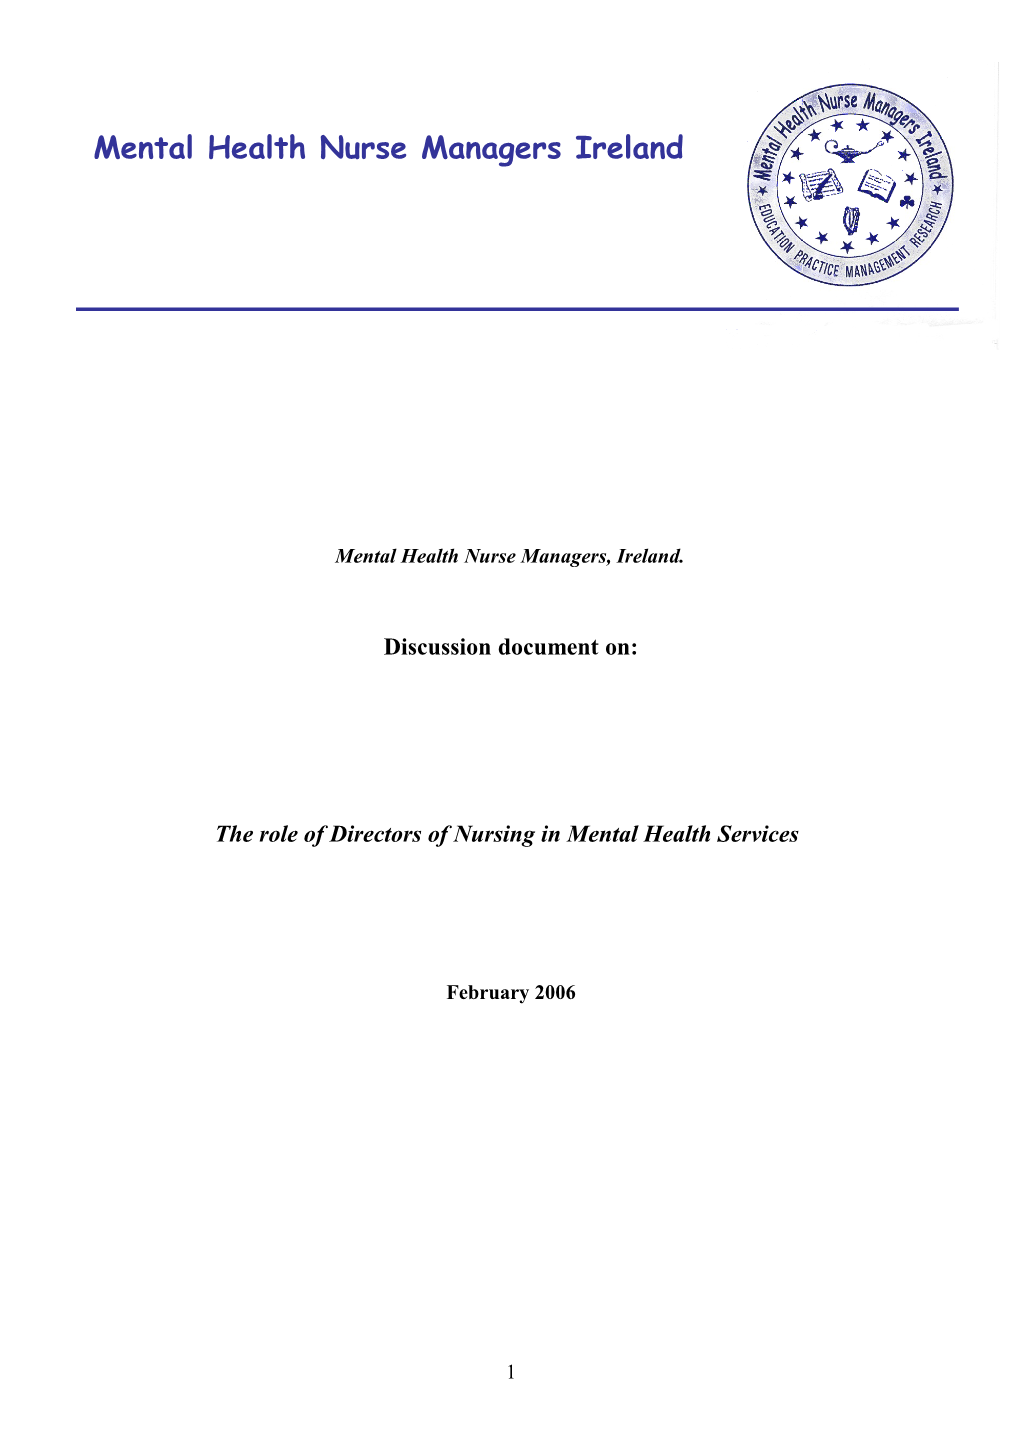 Directors of Nursing in Mental Health Services